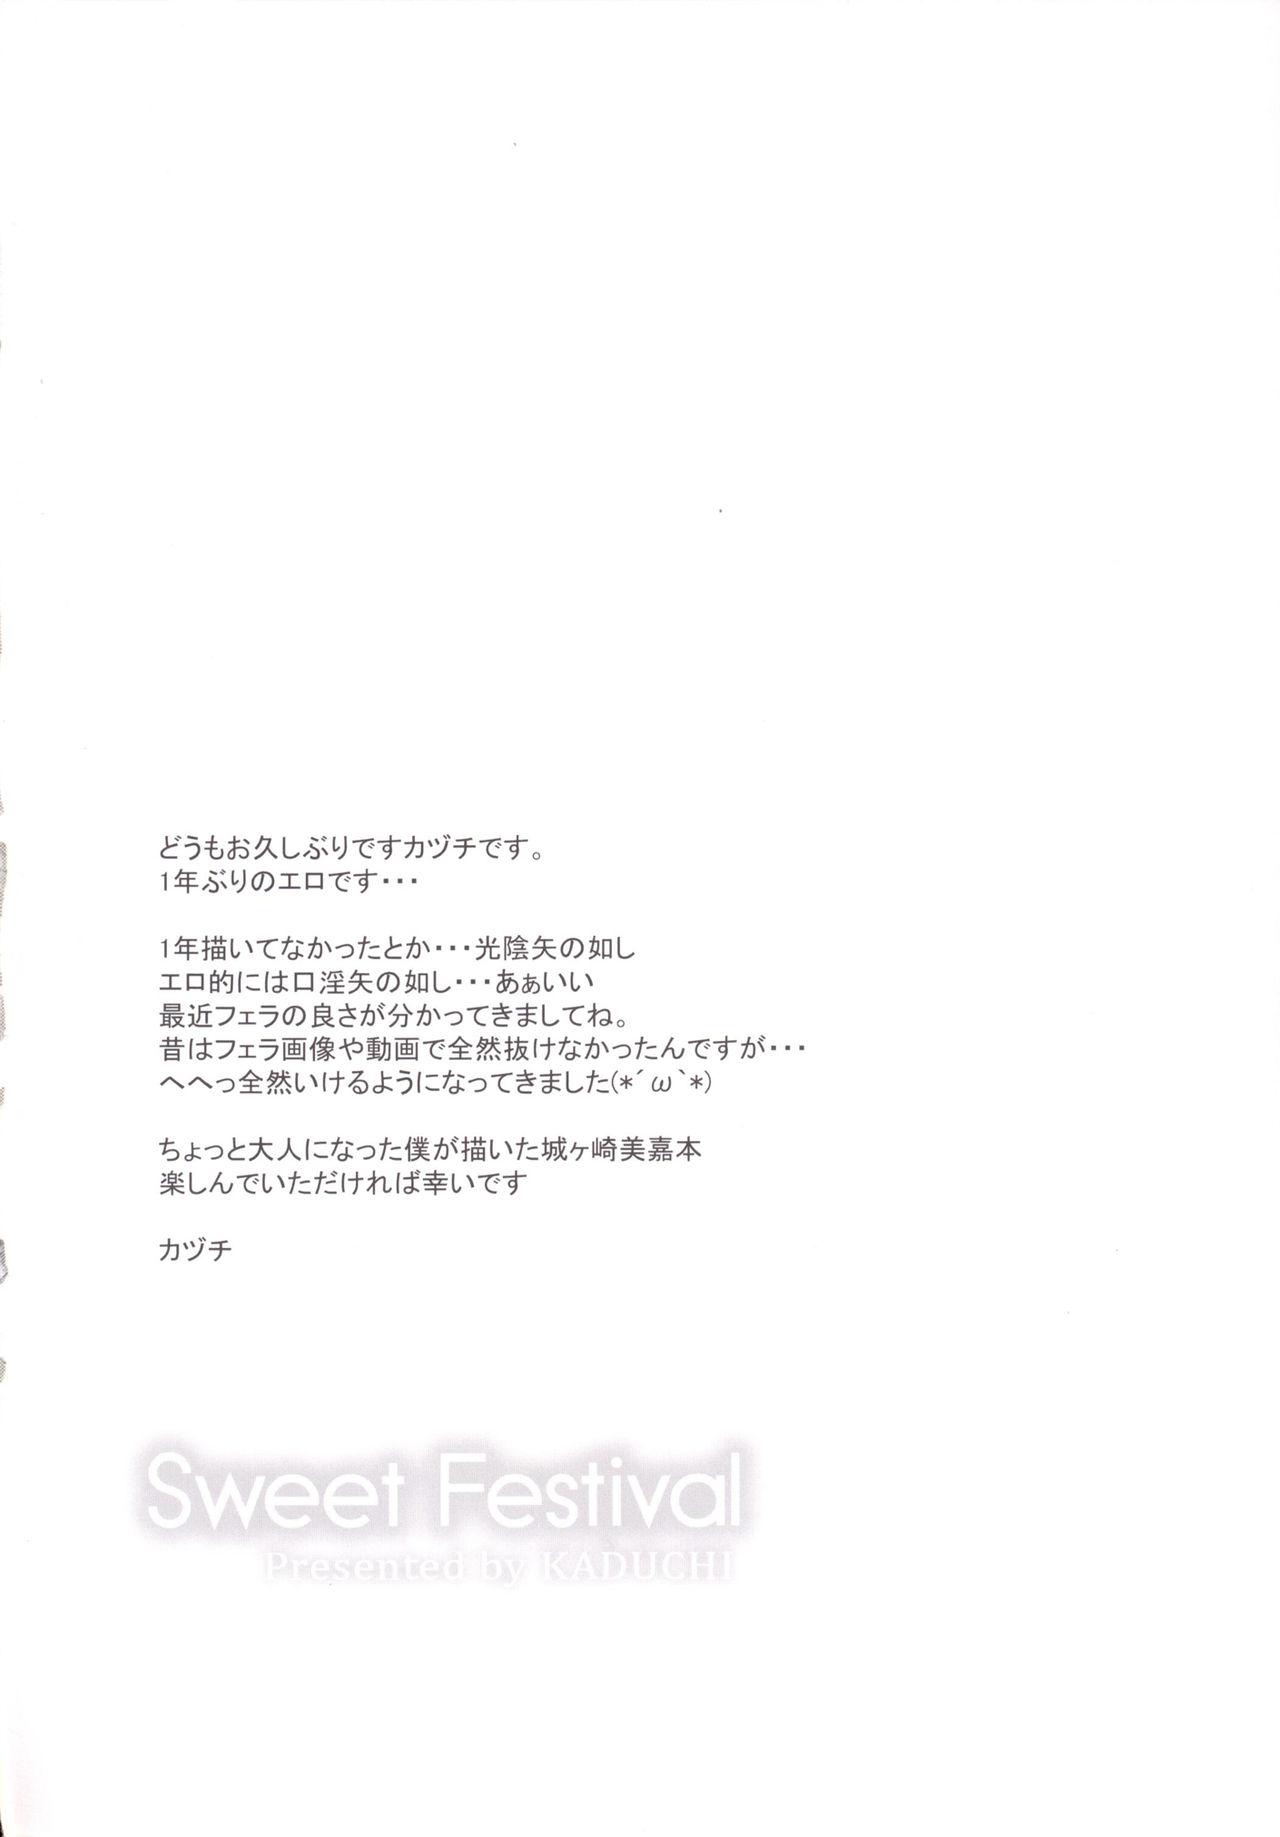 Sweet Festival 2